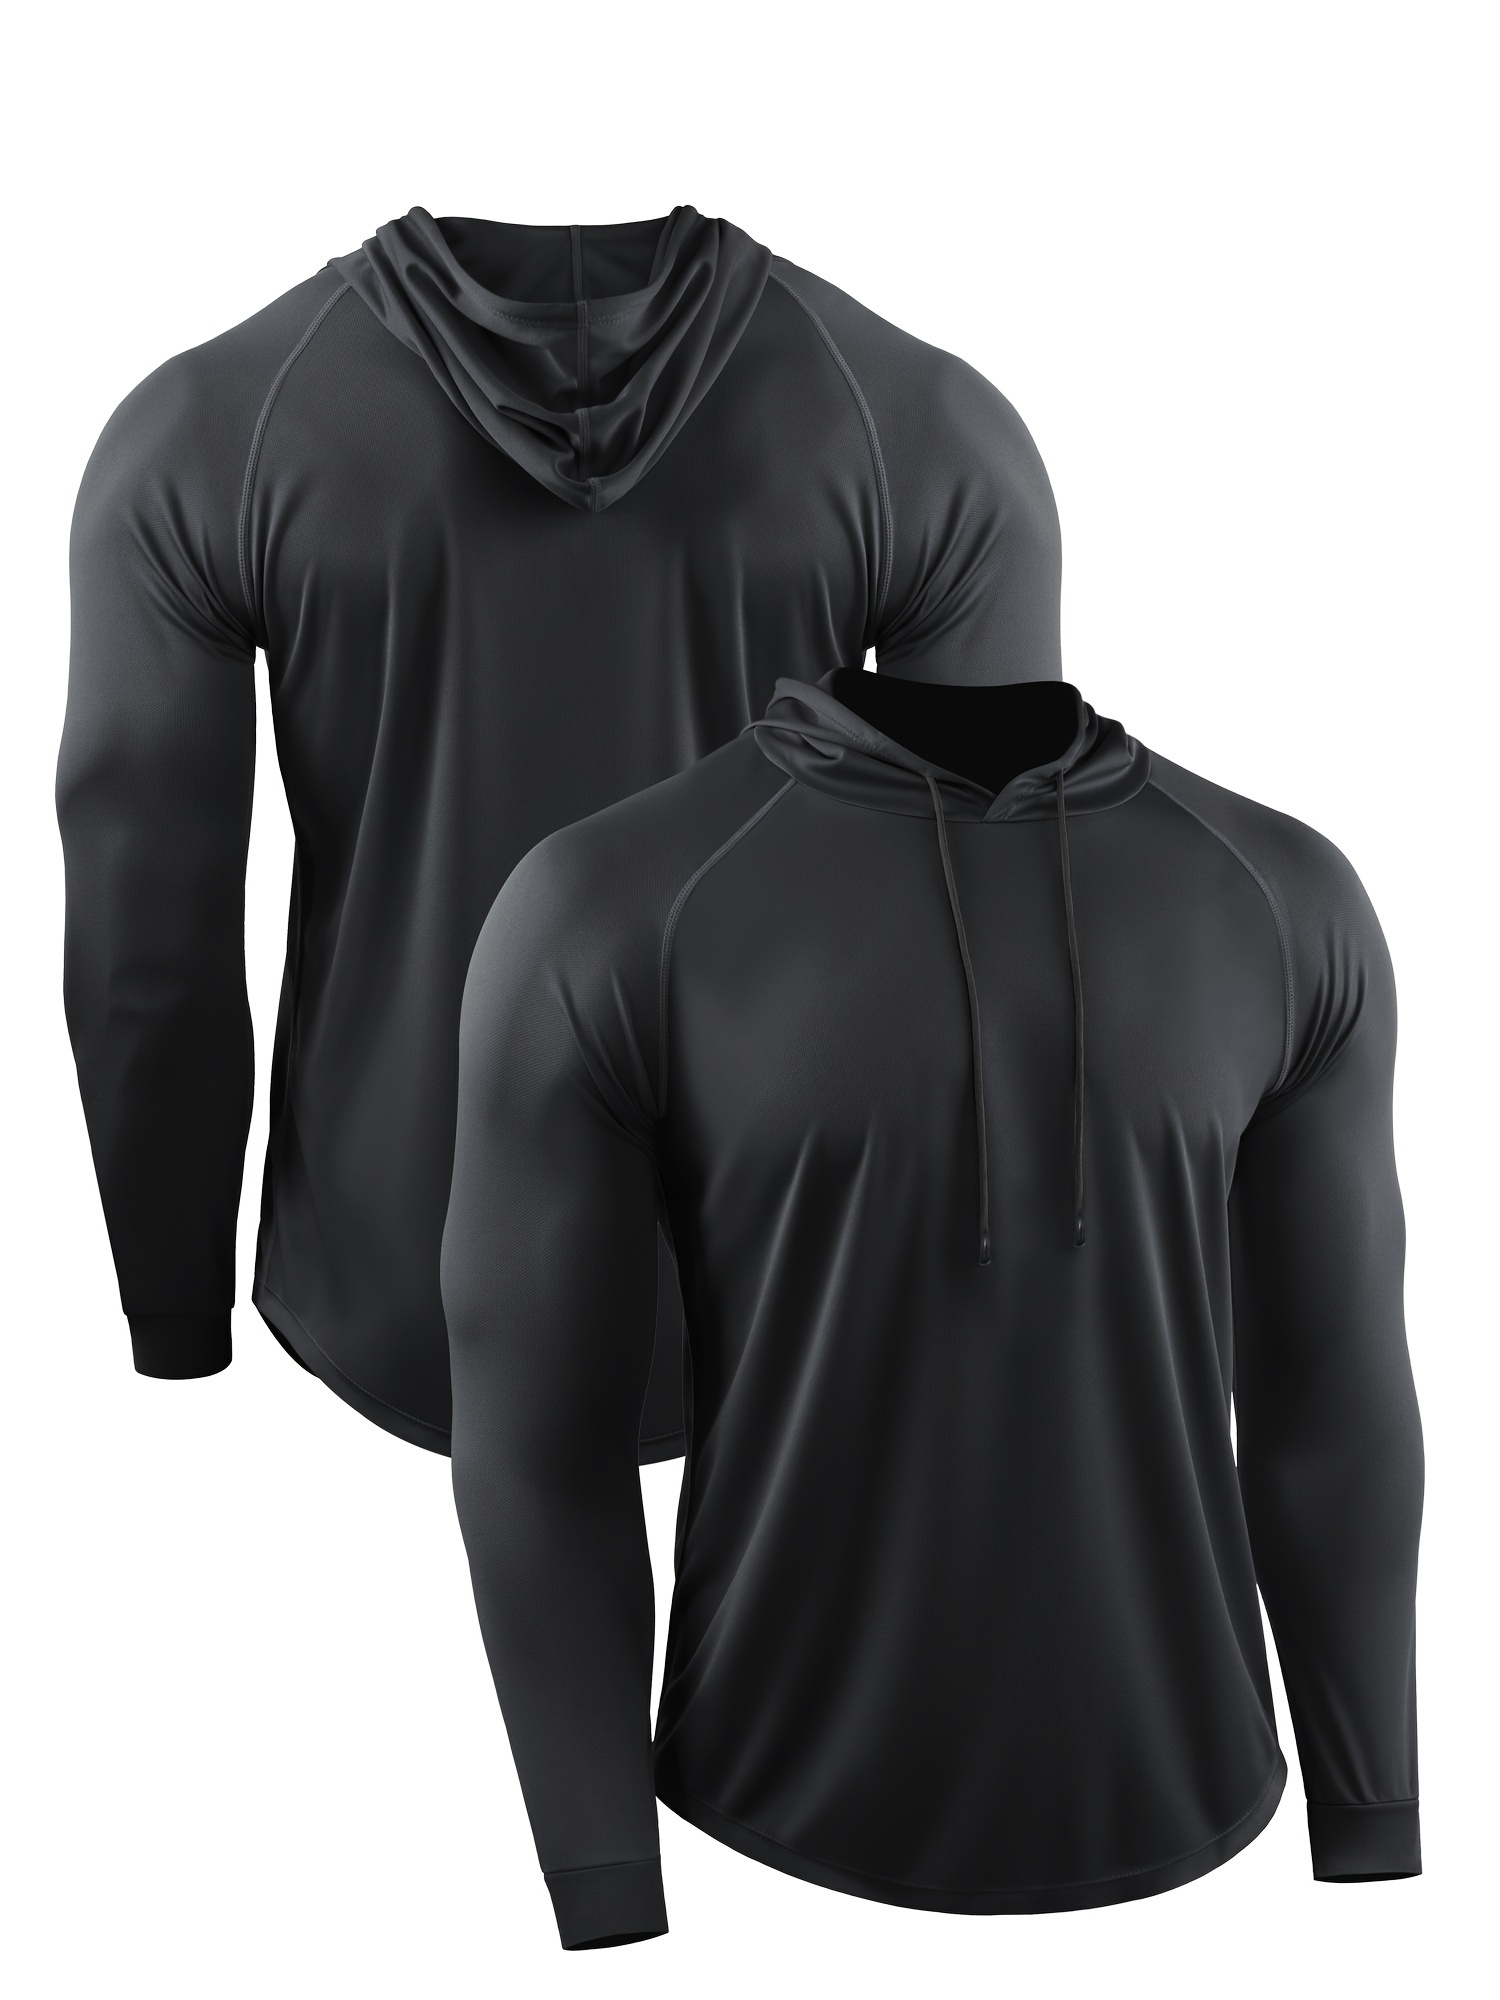 Black Long Sleeve Zip Up Sports Top